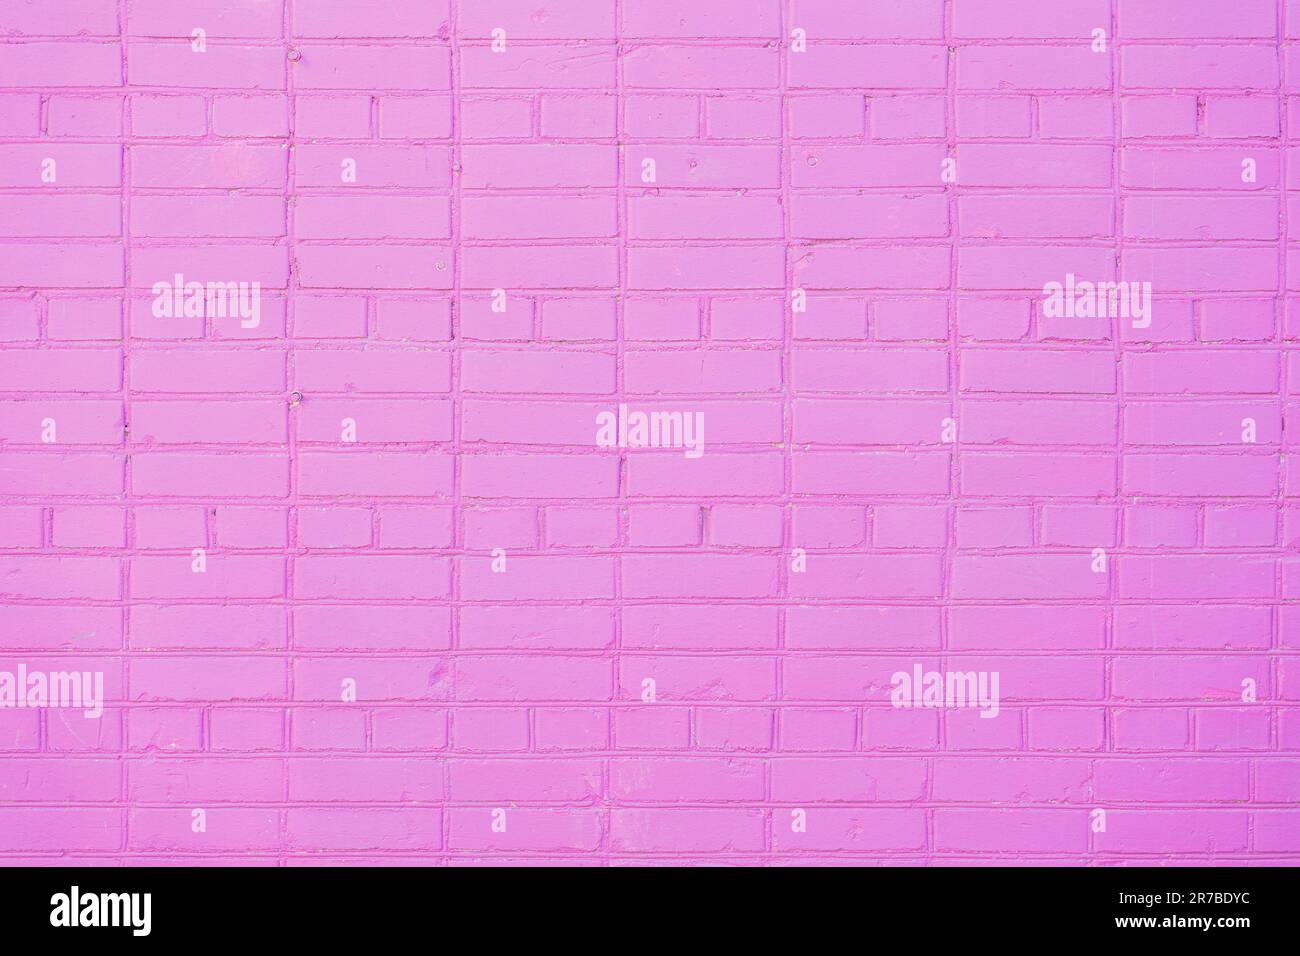 Wall background. Brickwork pattern, stonework interior stone, pink purple brick design stack. Stock Photo